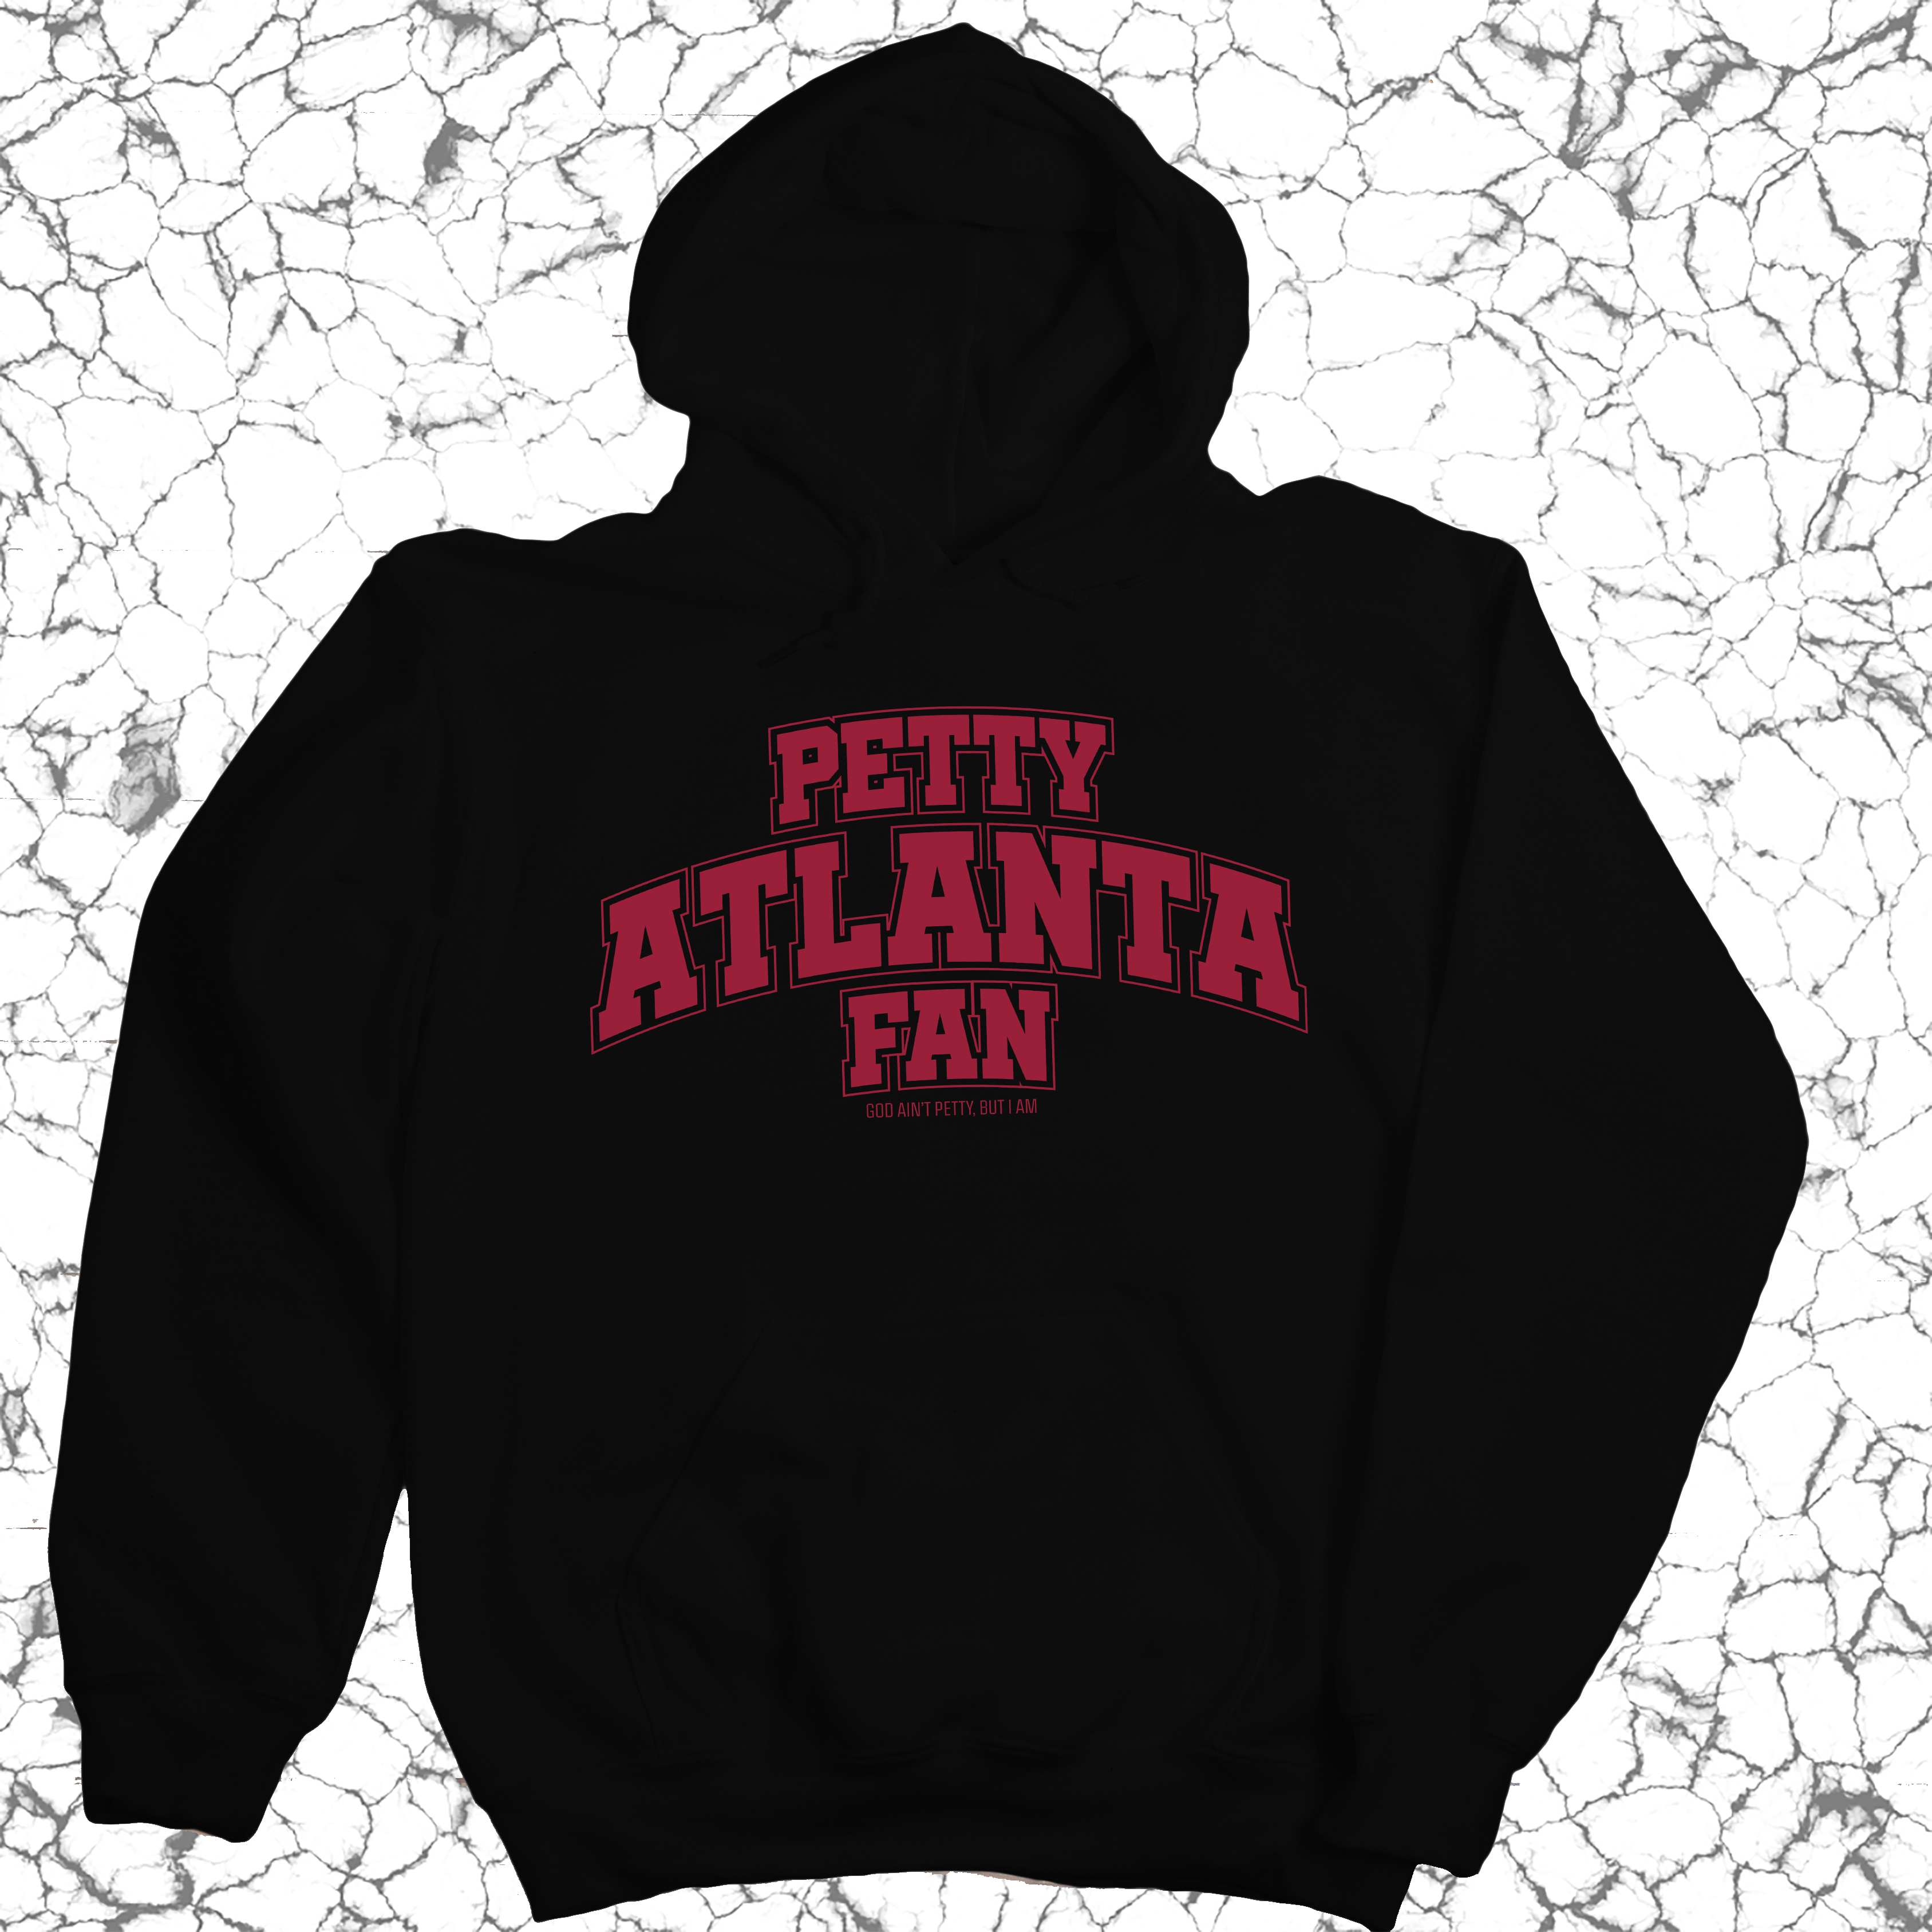 Petty Atlanta Fan Unisex Hoodie (Black/Red)-Hoodie-The Original God Ain't Petty But I Am